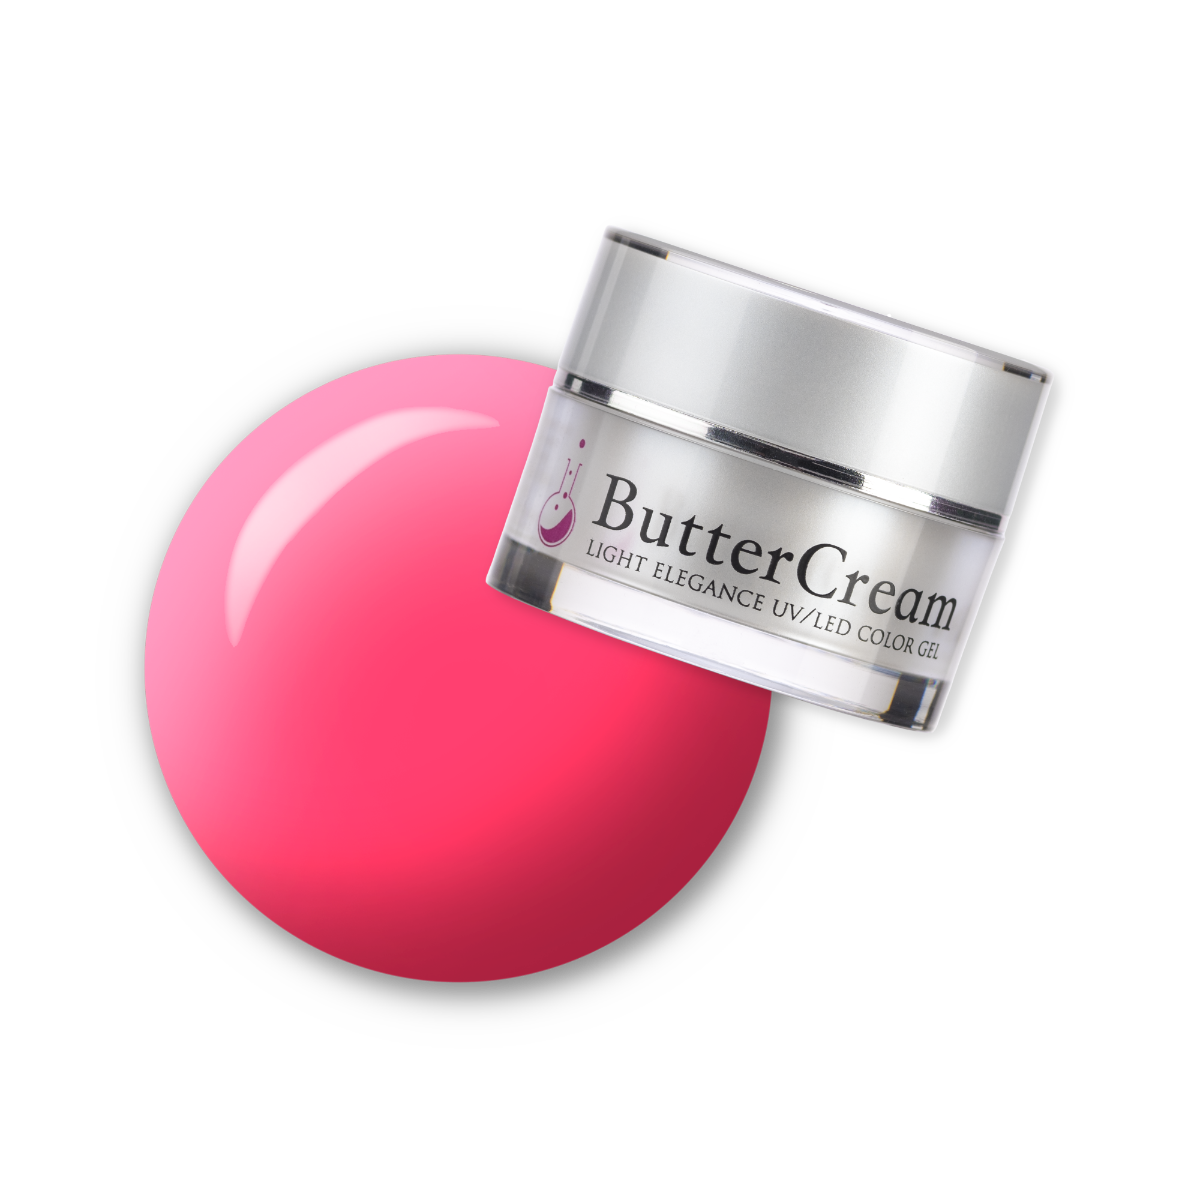 Light Elegance ButterCream - Ms. Martian - Creata Beauty - Professional Beauty Products